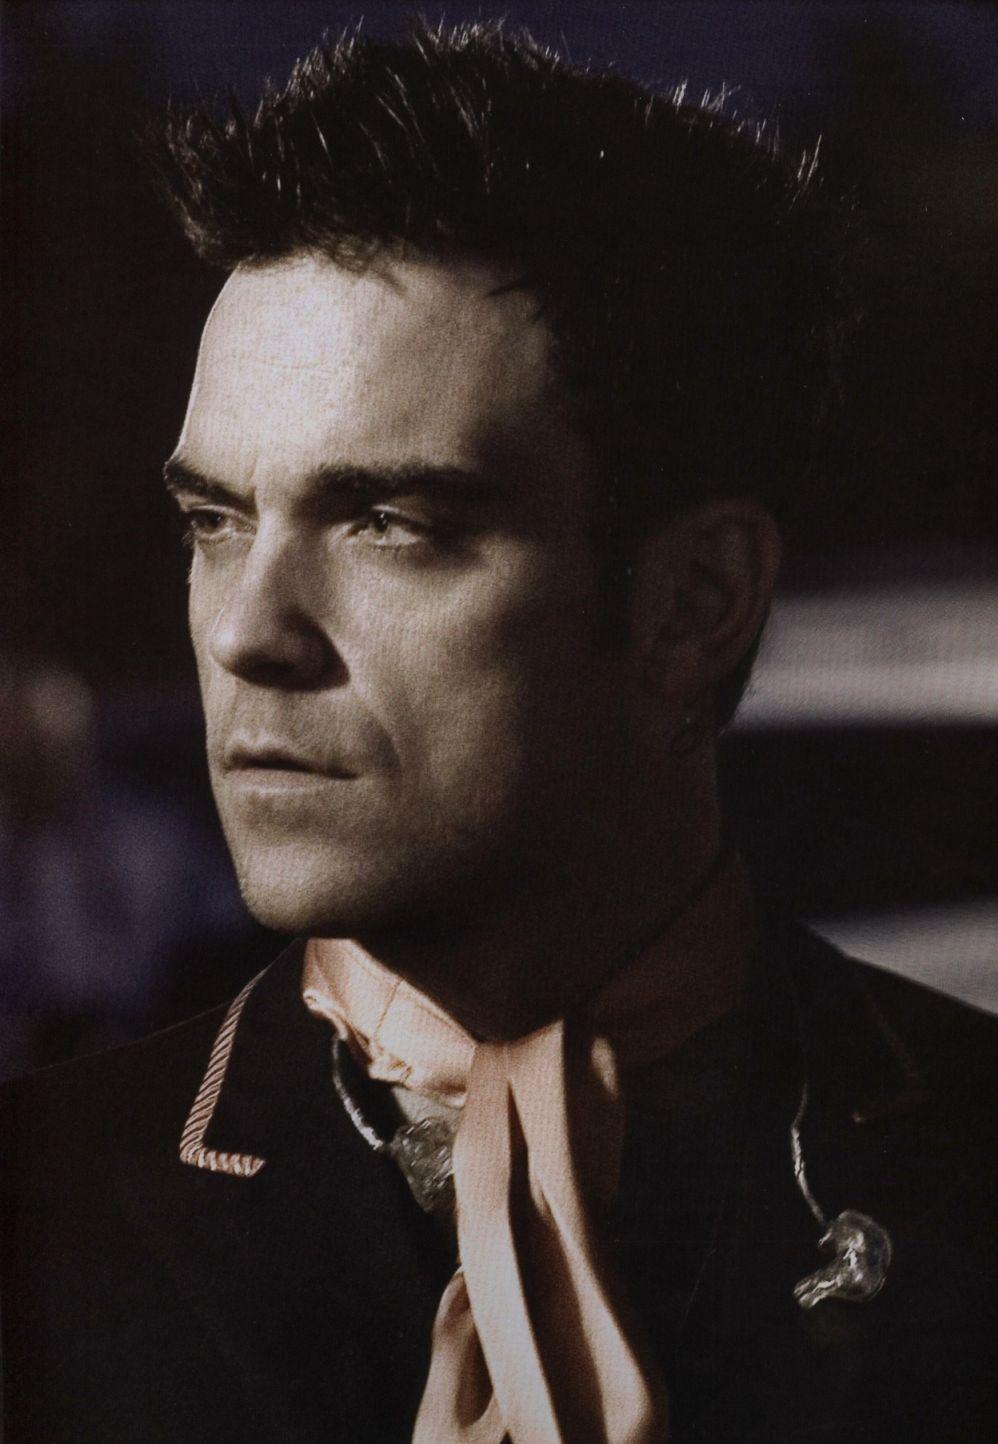 PFTW: Robbie Williams